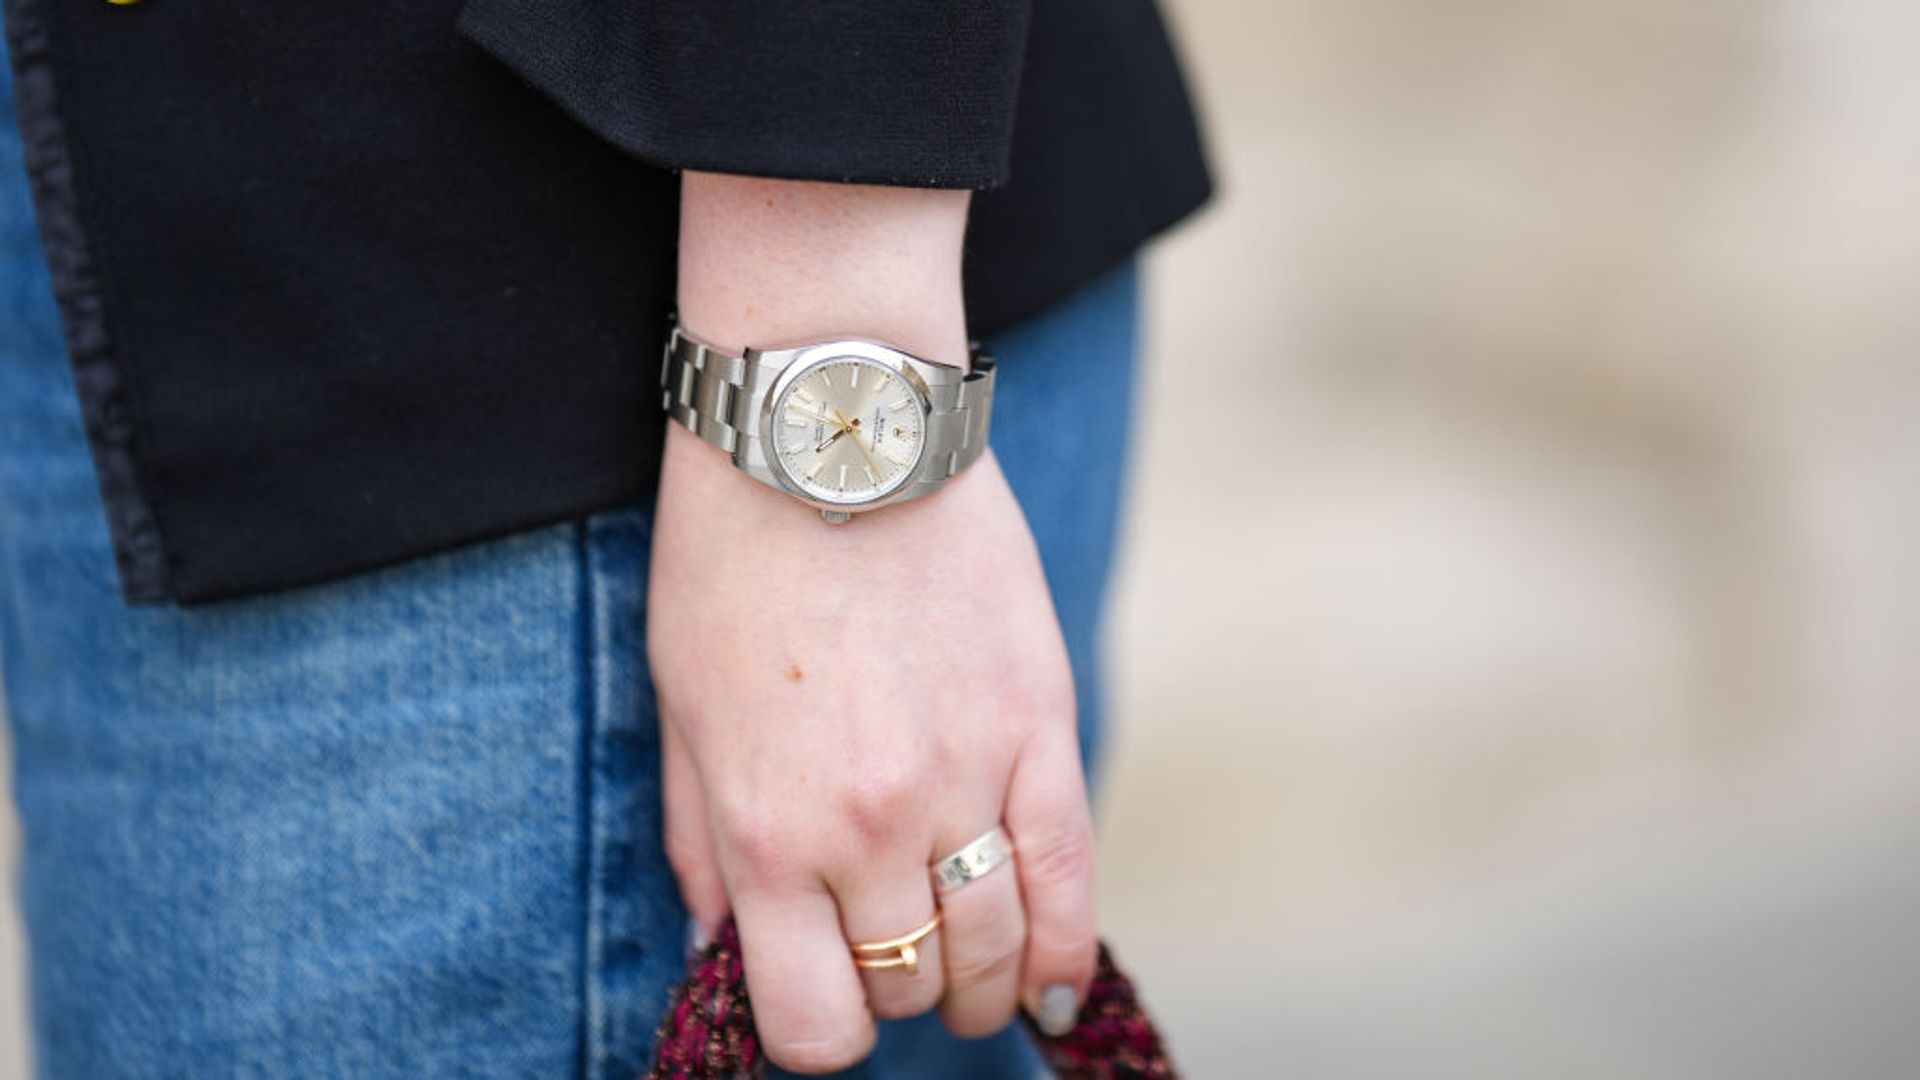 Iana Rad wears a Rolex Oyster Perpetual silver watch